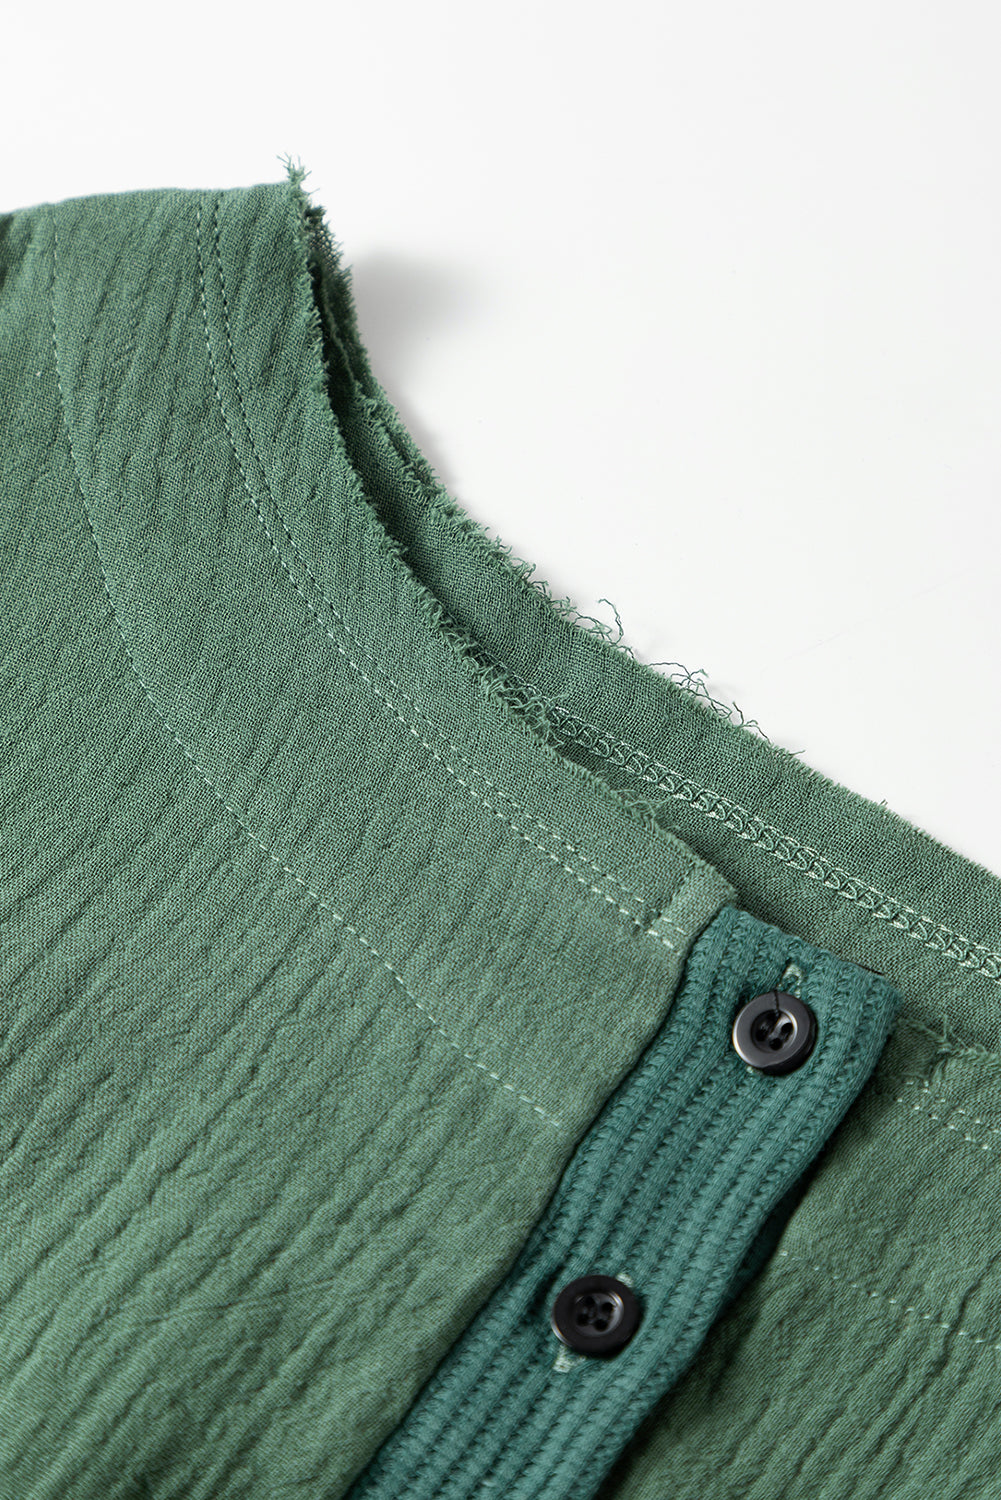 Zelena teksturirana ohlapna bluza z ovratnikom, pleteno v obliki vaflja